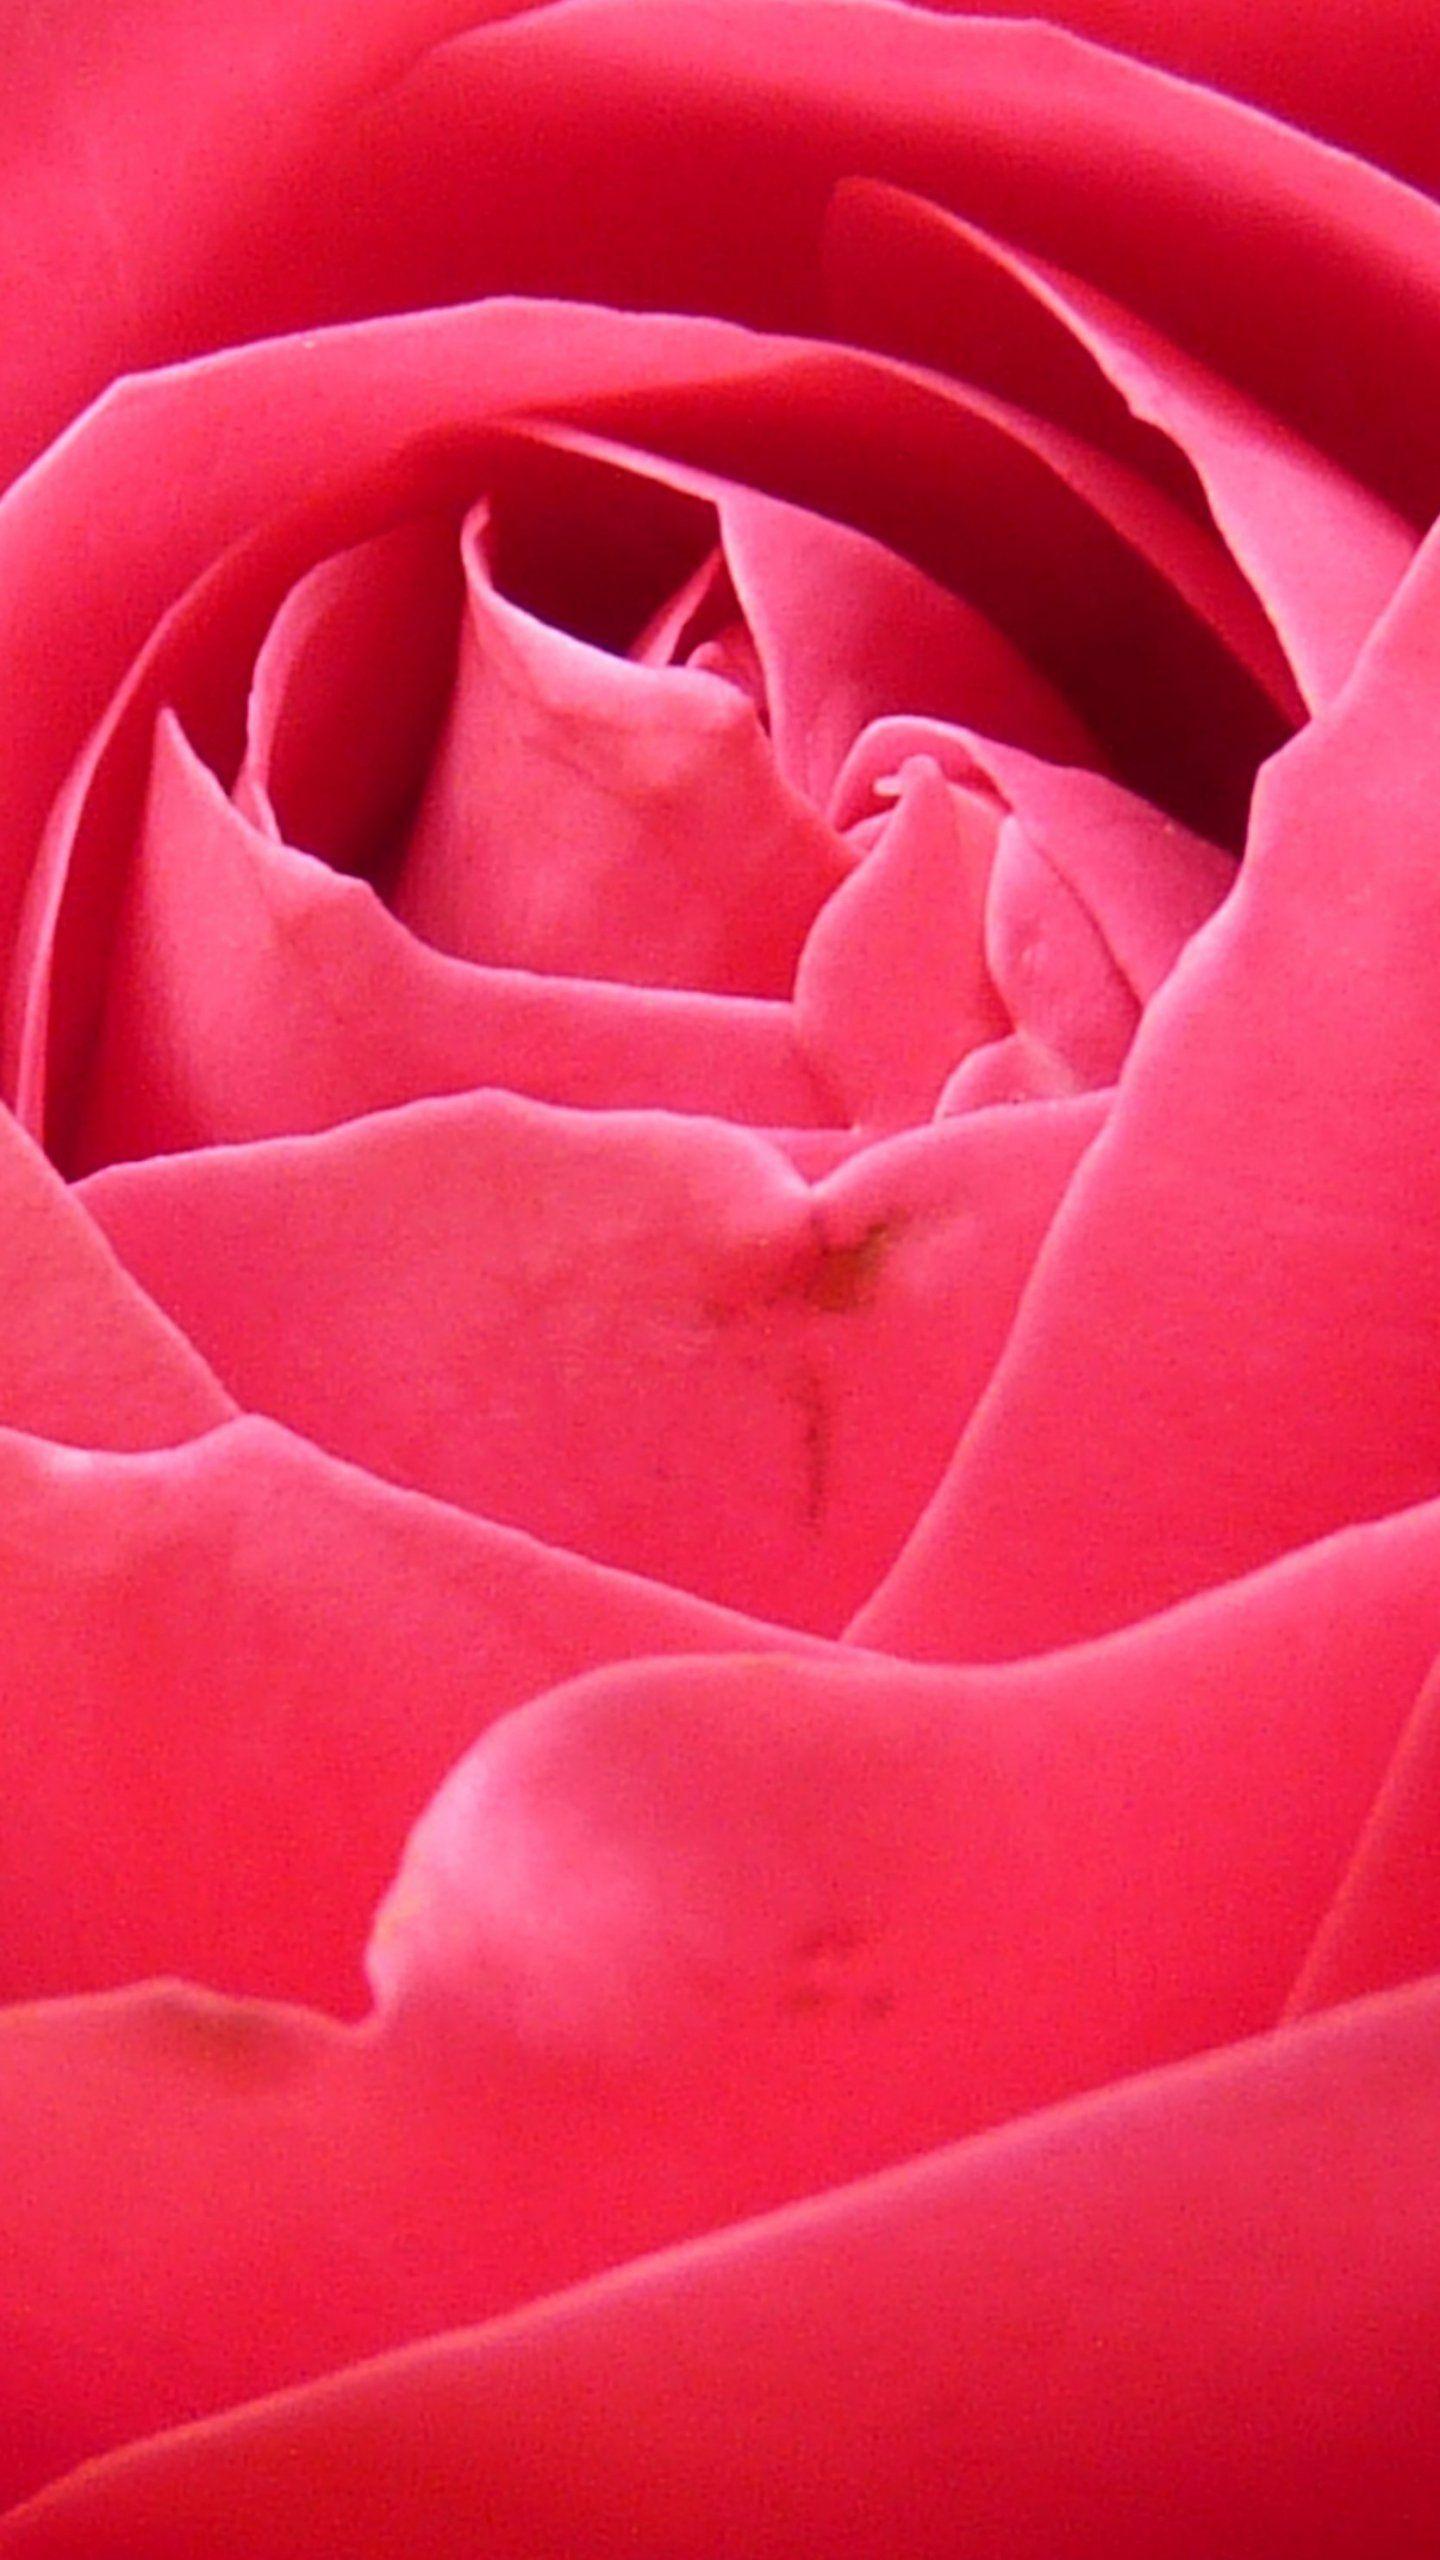 Bright Pink Rose Closeup Wallpaper, Android & Desktop